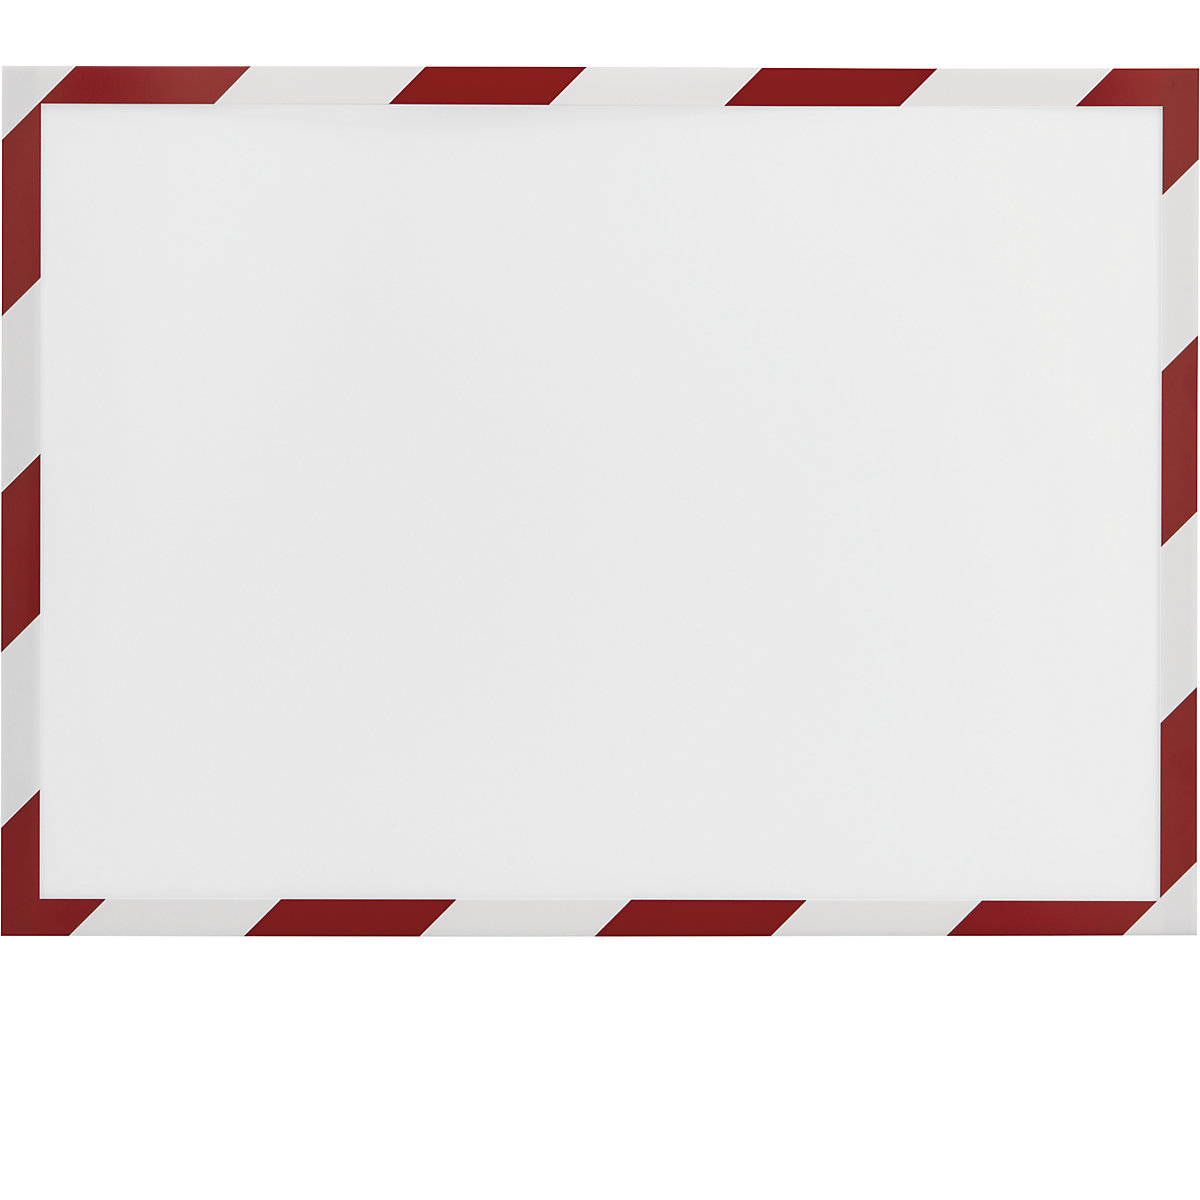 Magnetni okvir SAFETY – magnetoplan, DE po 5 kosov, format DIN A4, rdeče-bele barve-7